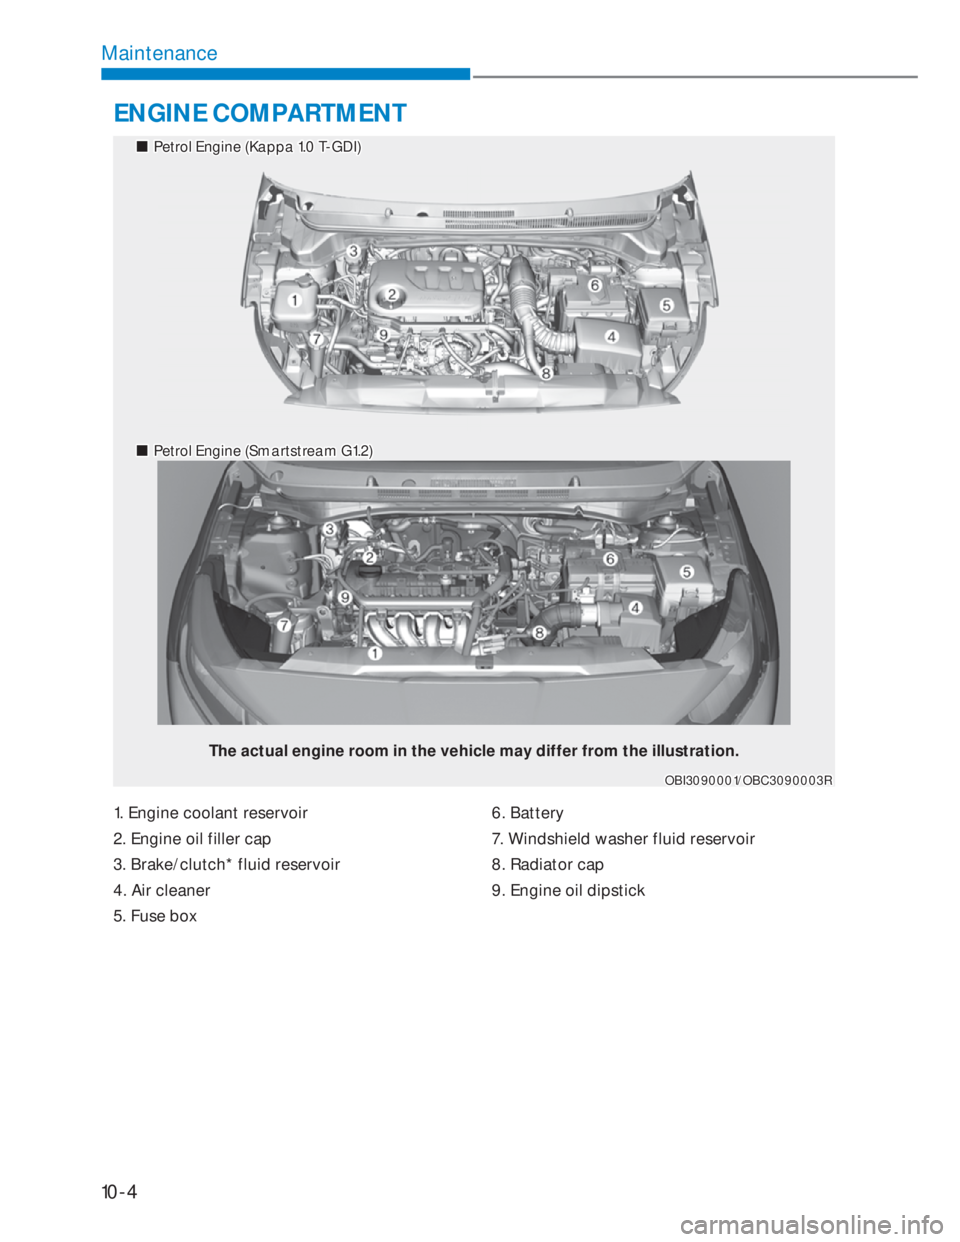 HYUNDAI I20 2021 User Guide 10-4
Maintenance
1. Engine coolant reservoir
2. Engine oil filler cap 
3. Brake/clutch* fluid reservoir 
4. Air cleaner 
5. Fuse box 6. Battery 
7. Windshield washer fluid reservoir 
8. Radiator cap
9